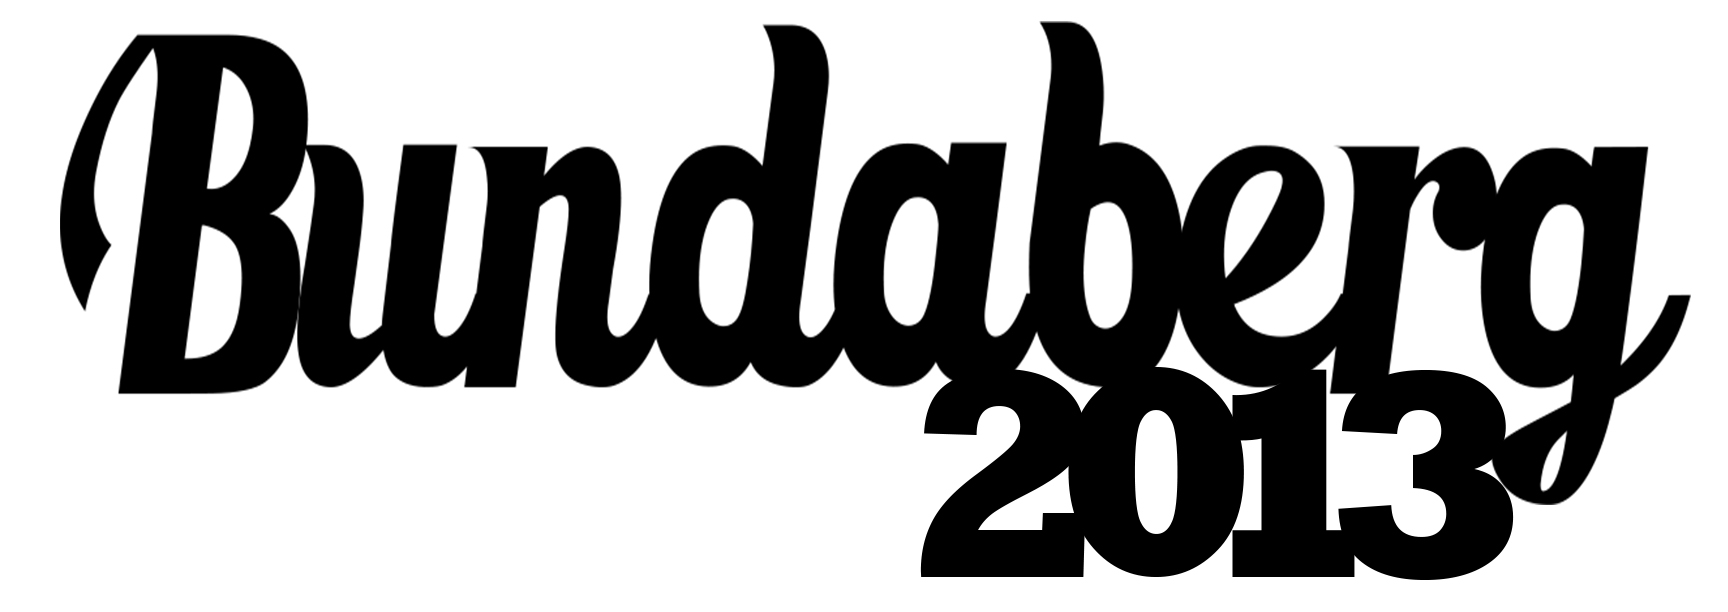 Bundaberg 2013